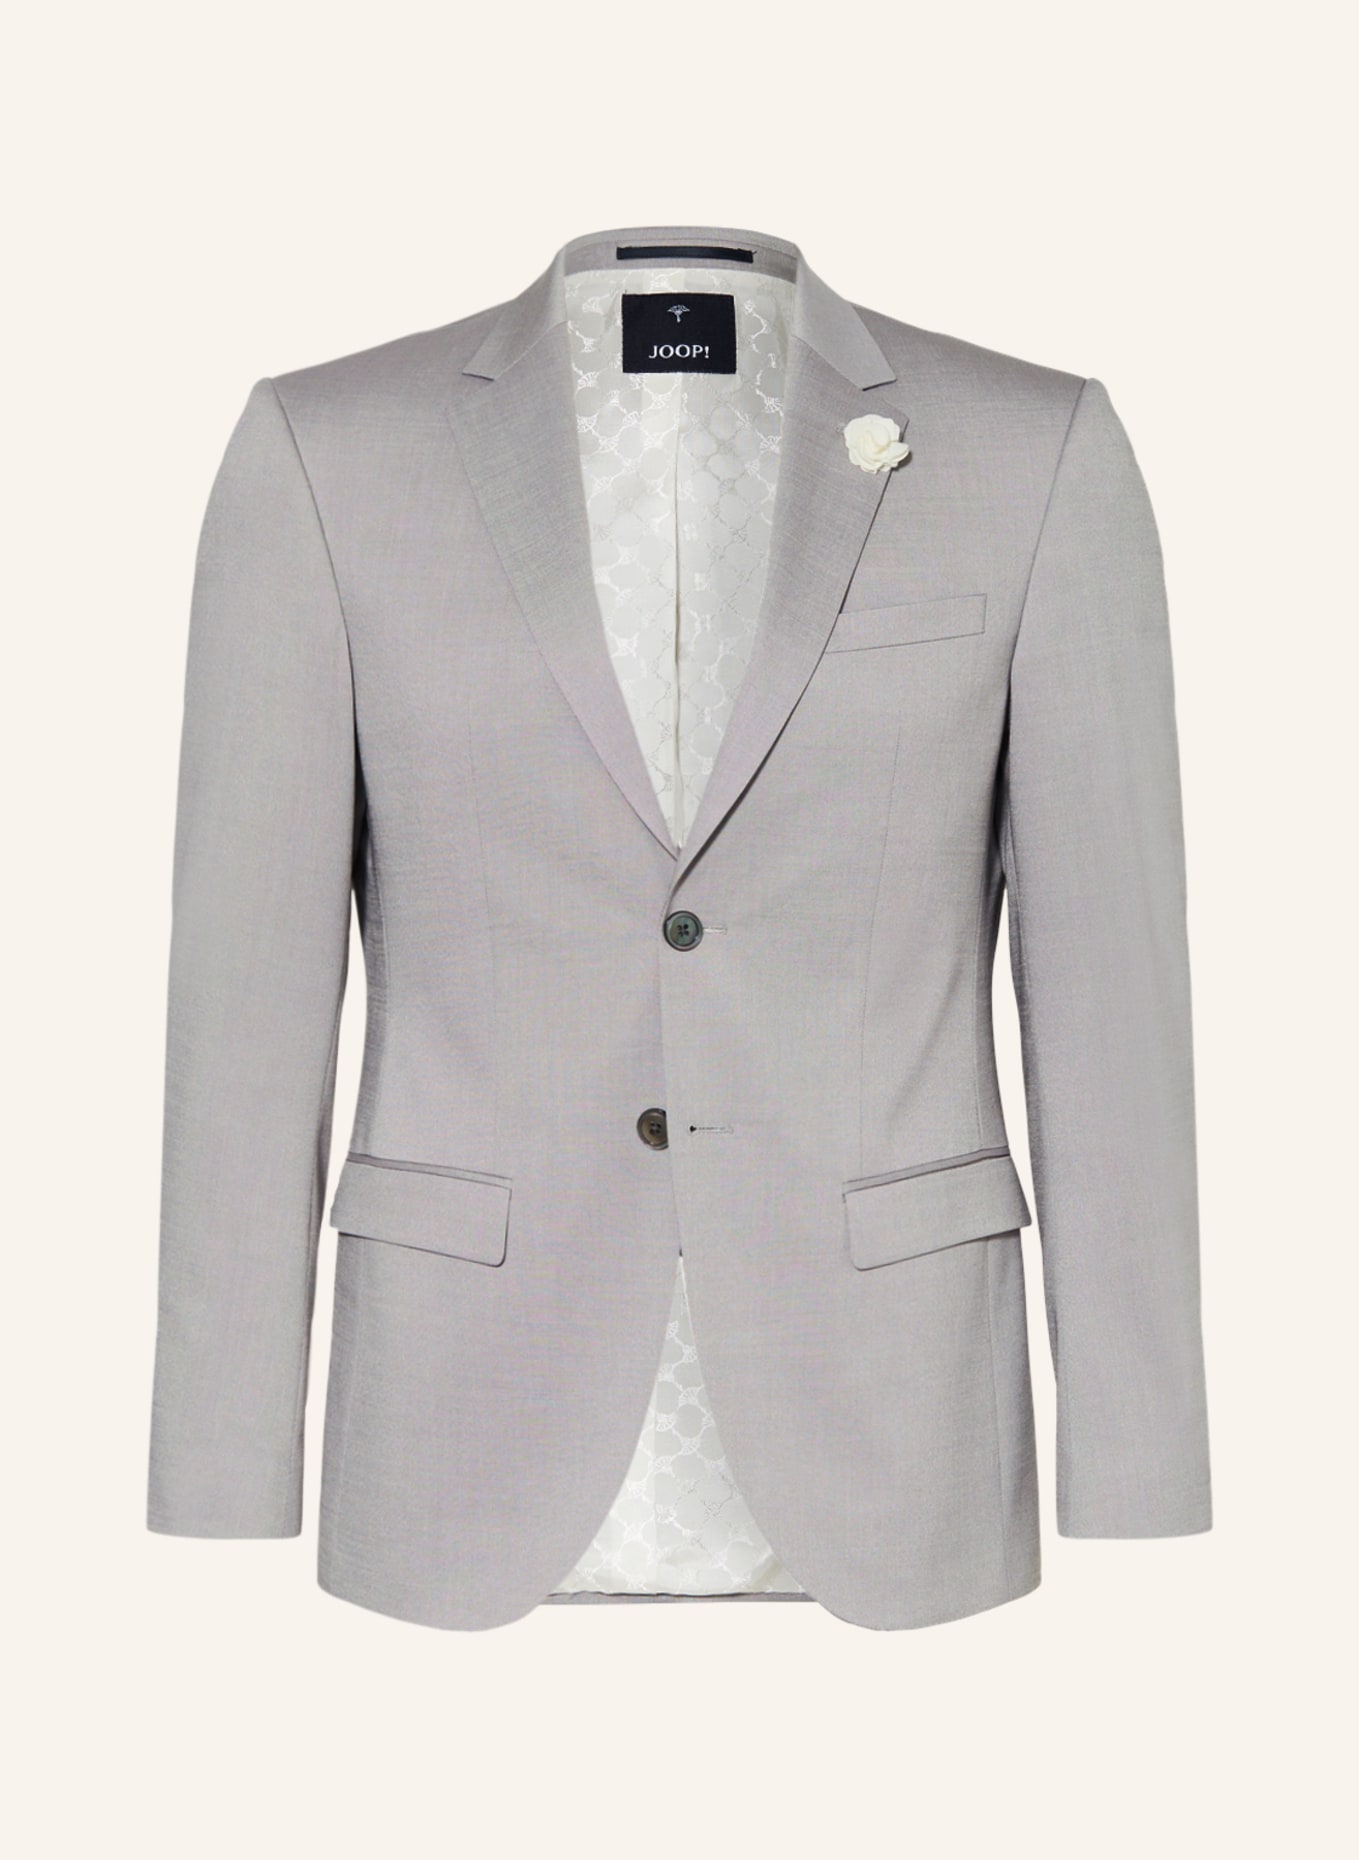 JOOP! Suit jacket WEDDING DAMON extra slim fit, Color: 060 Open Grey                  060 (Image 1)